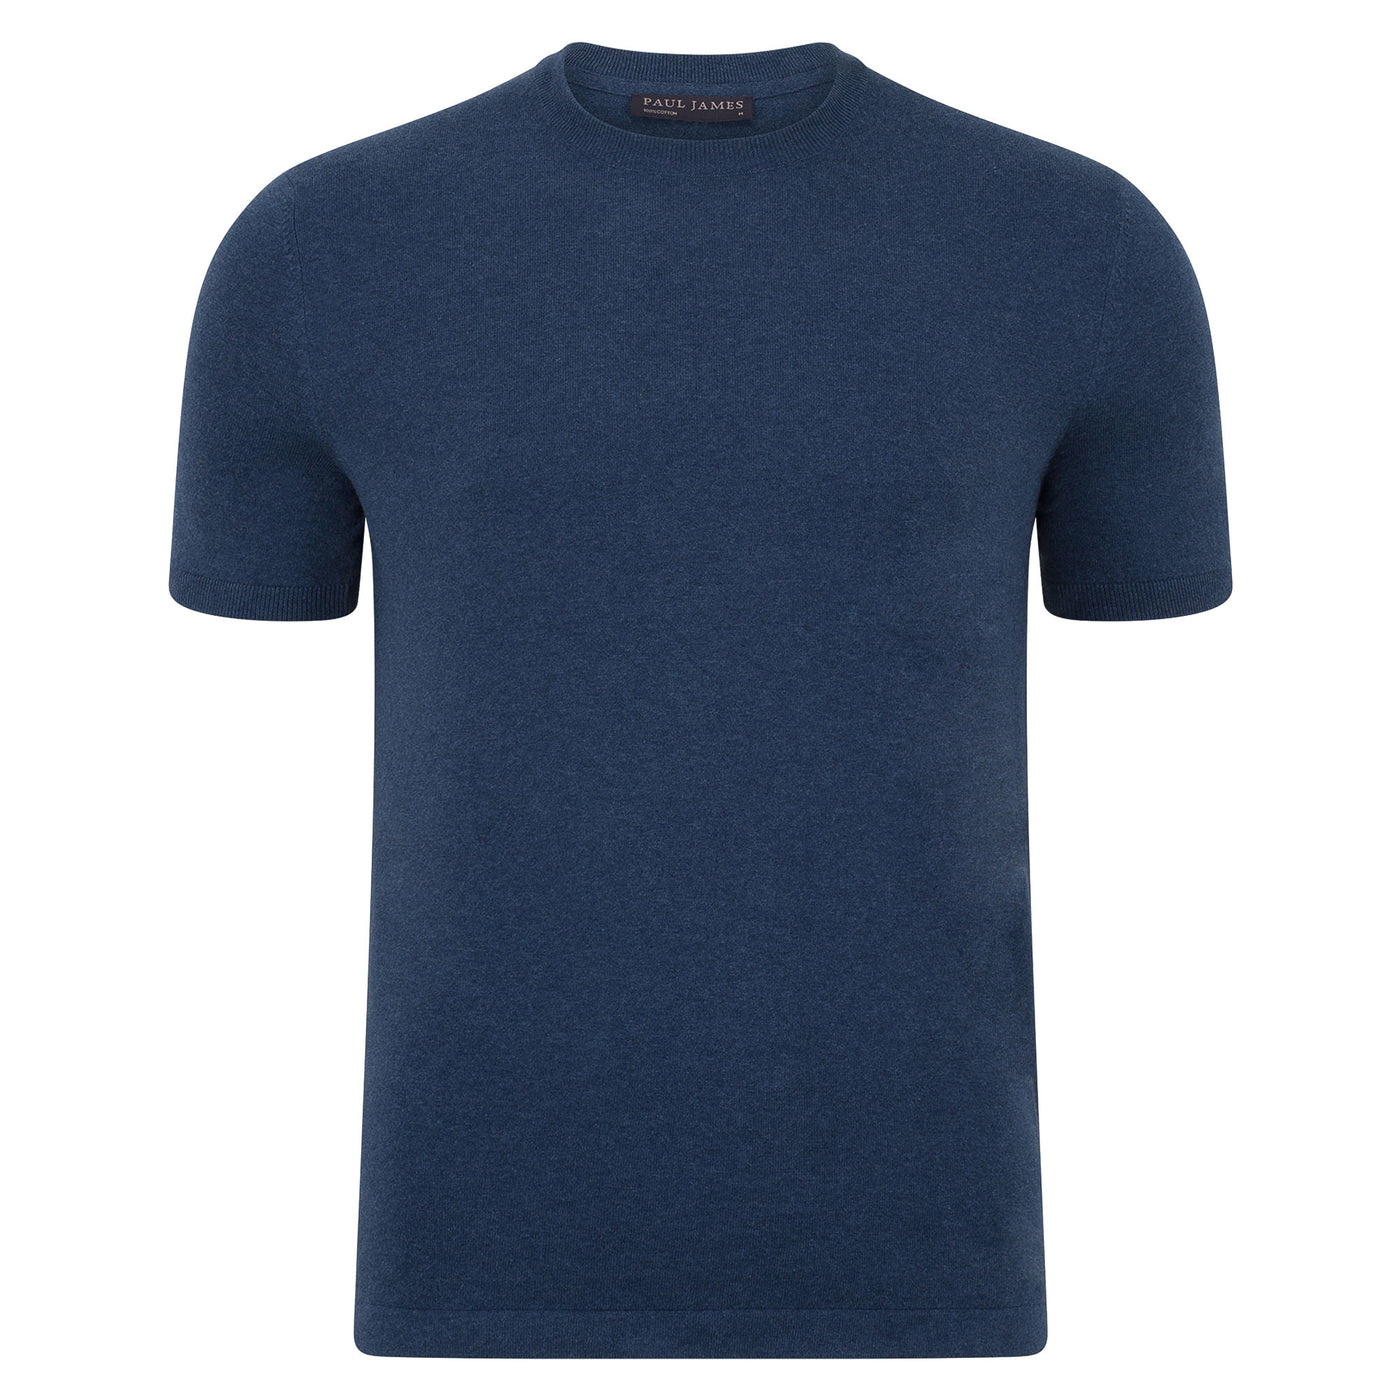 blue mens knitted t-shirt